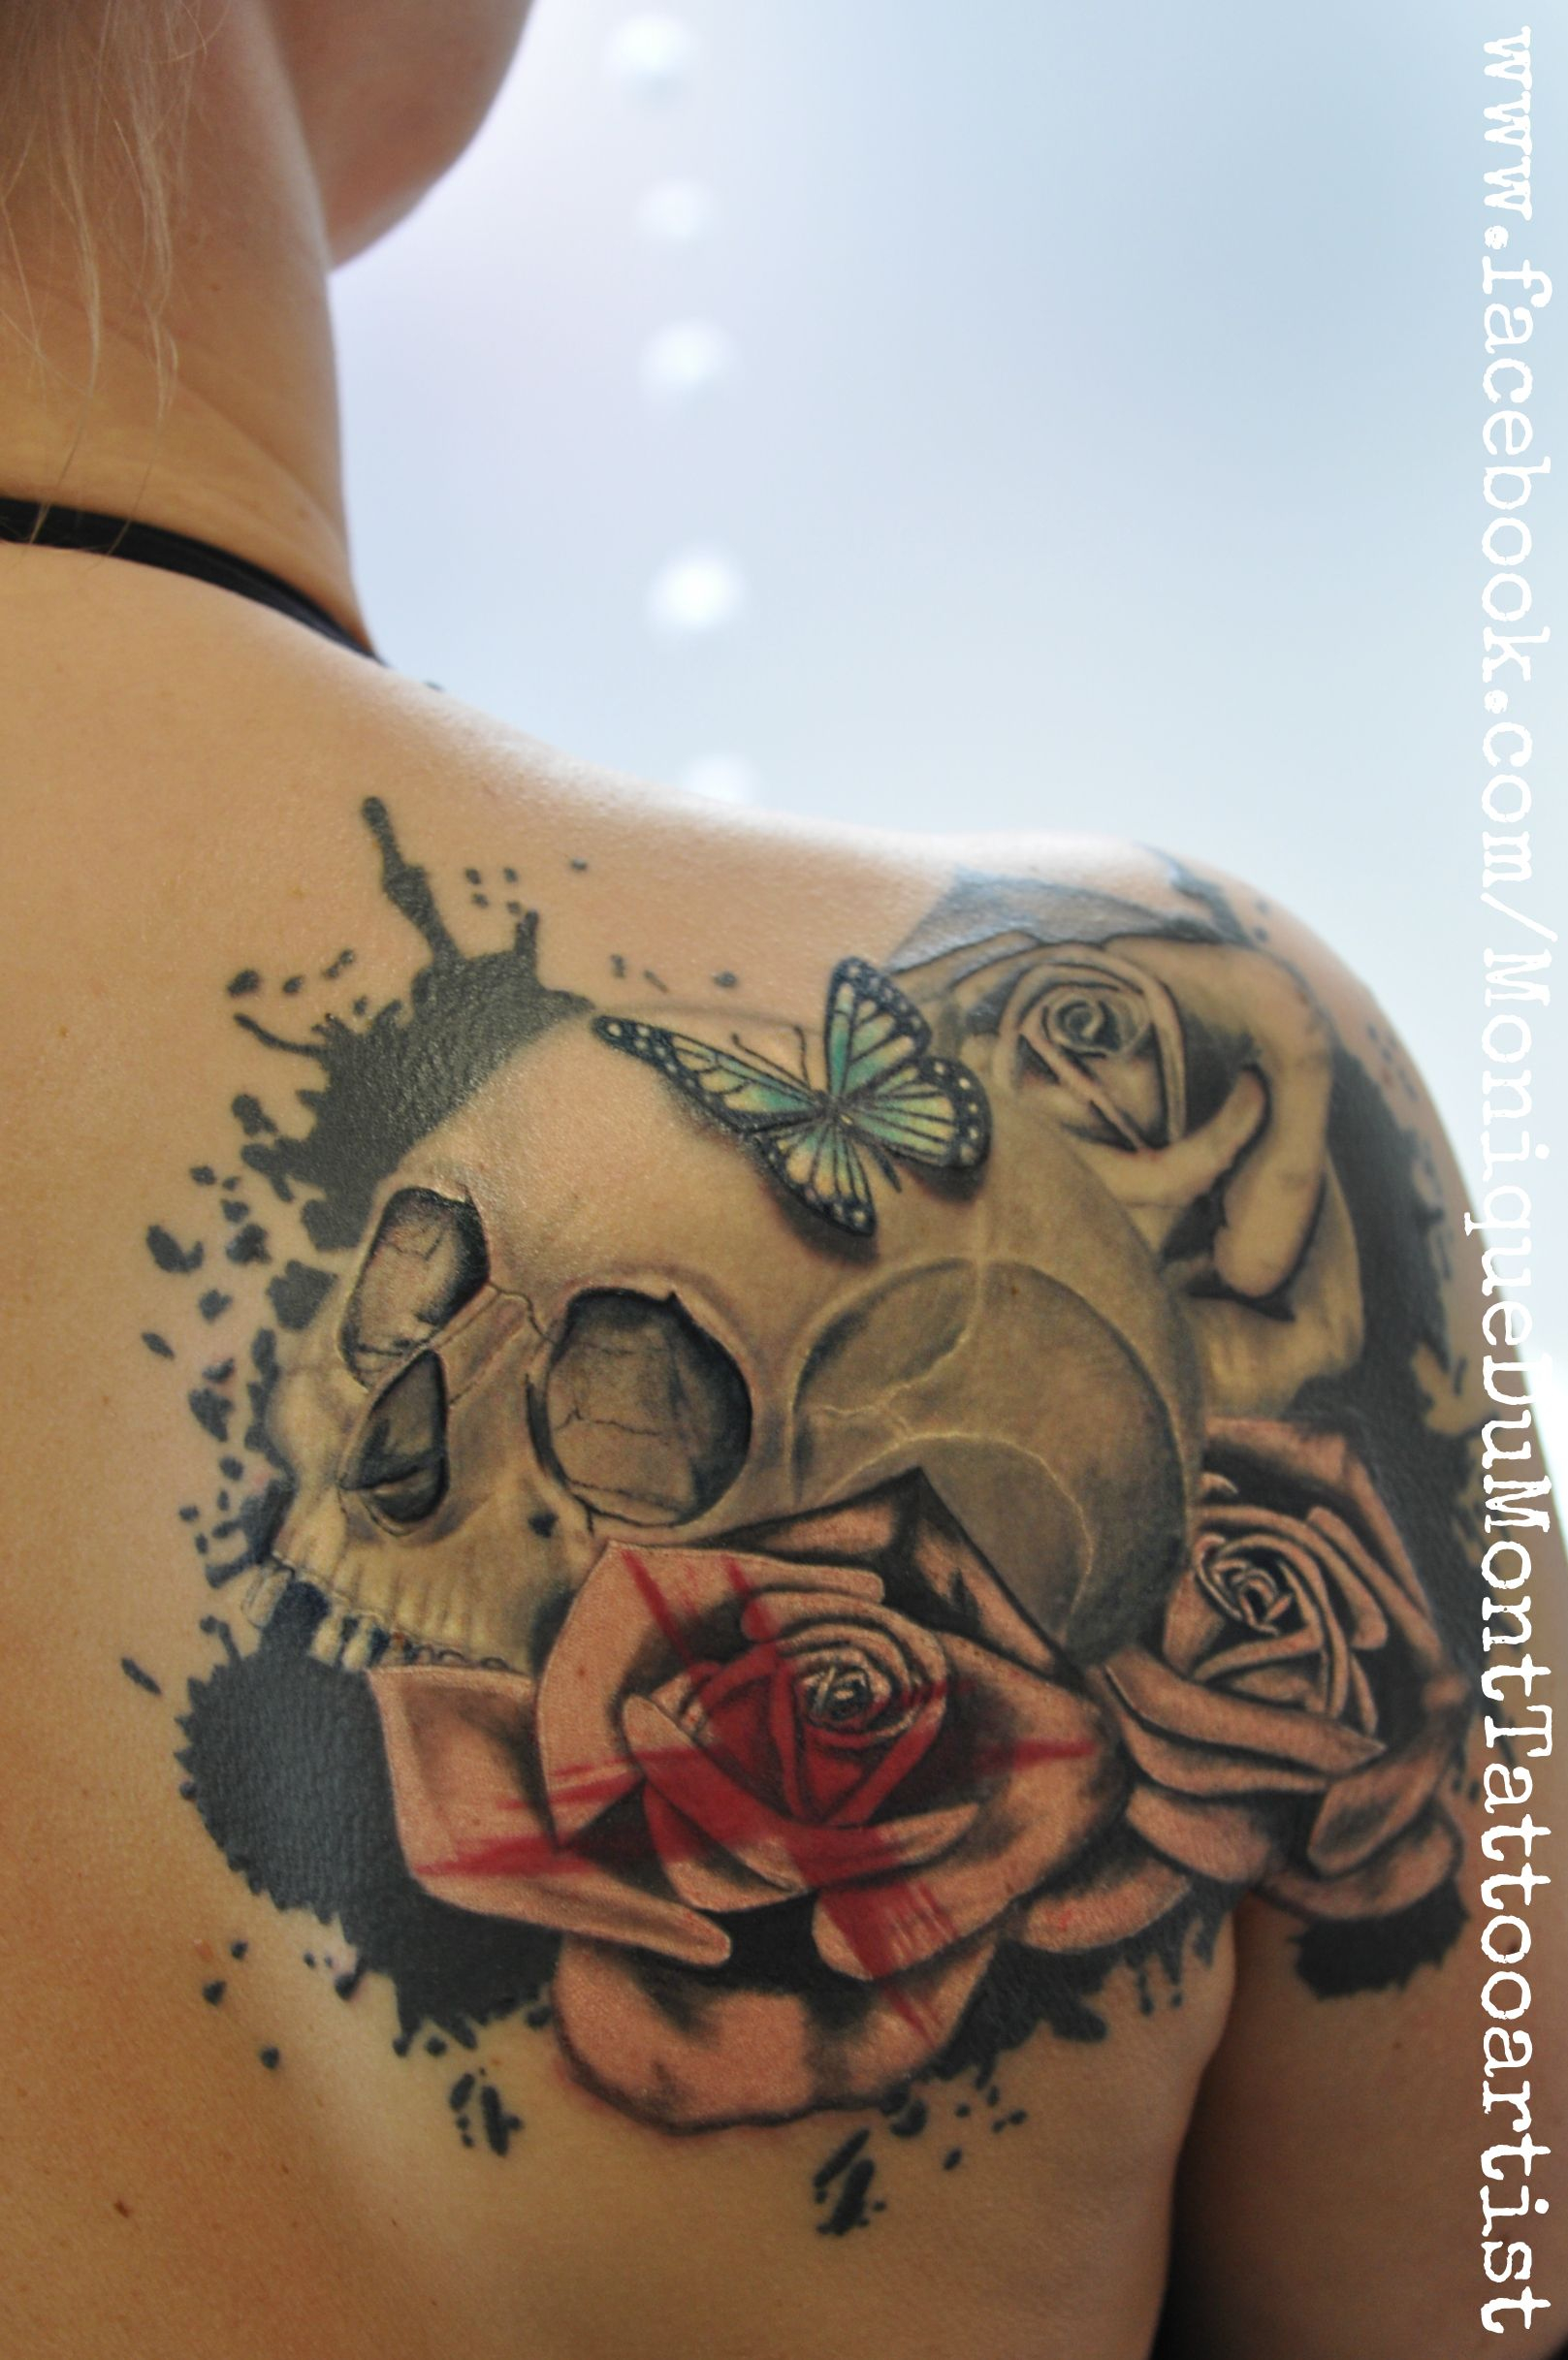 Skull Butterfly Roses Tattoo Tattoos Tattoos Rose Tattoos Skull within dimensions 1617 X 2434